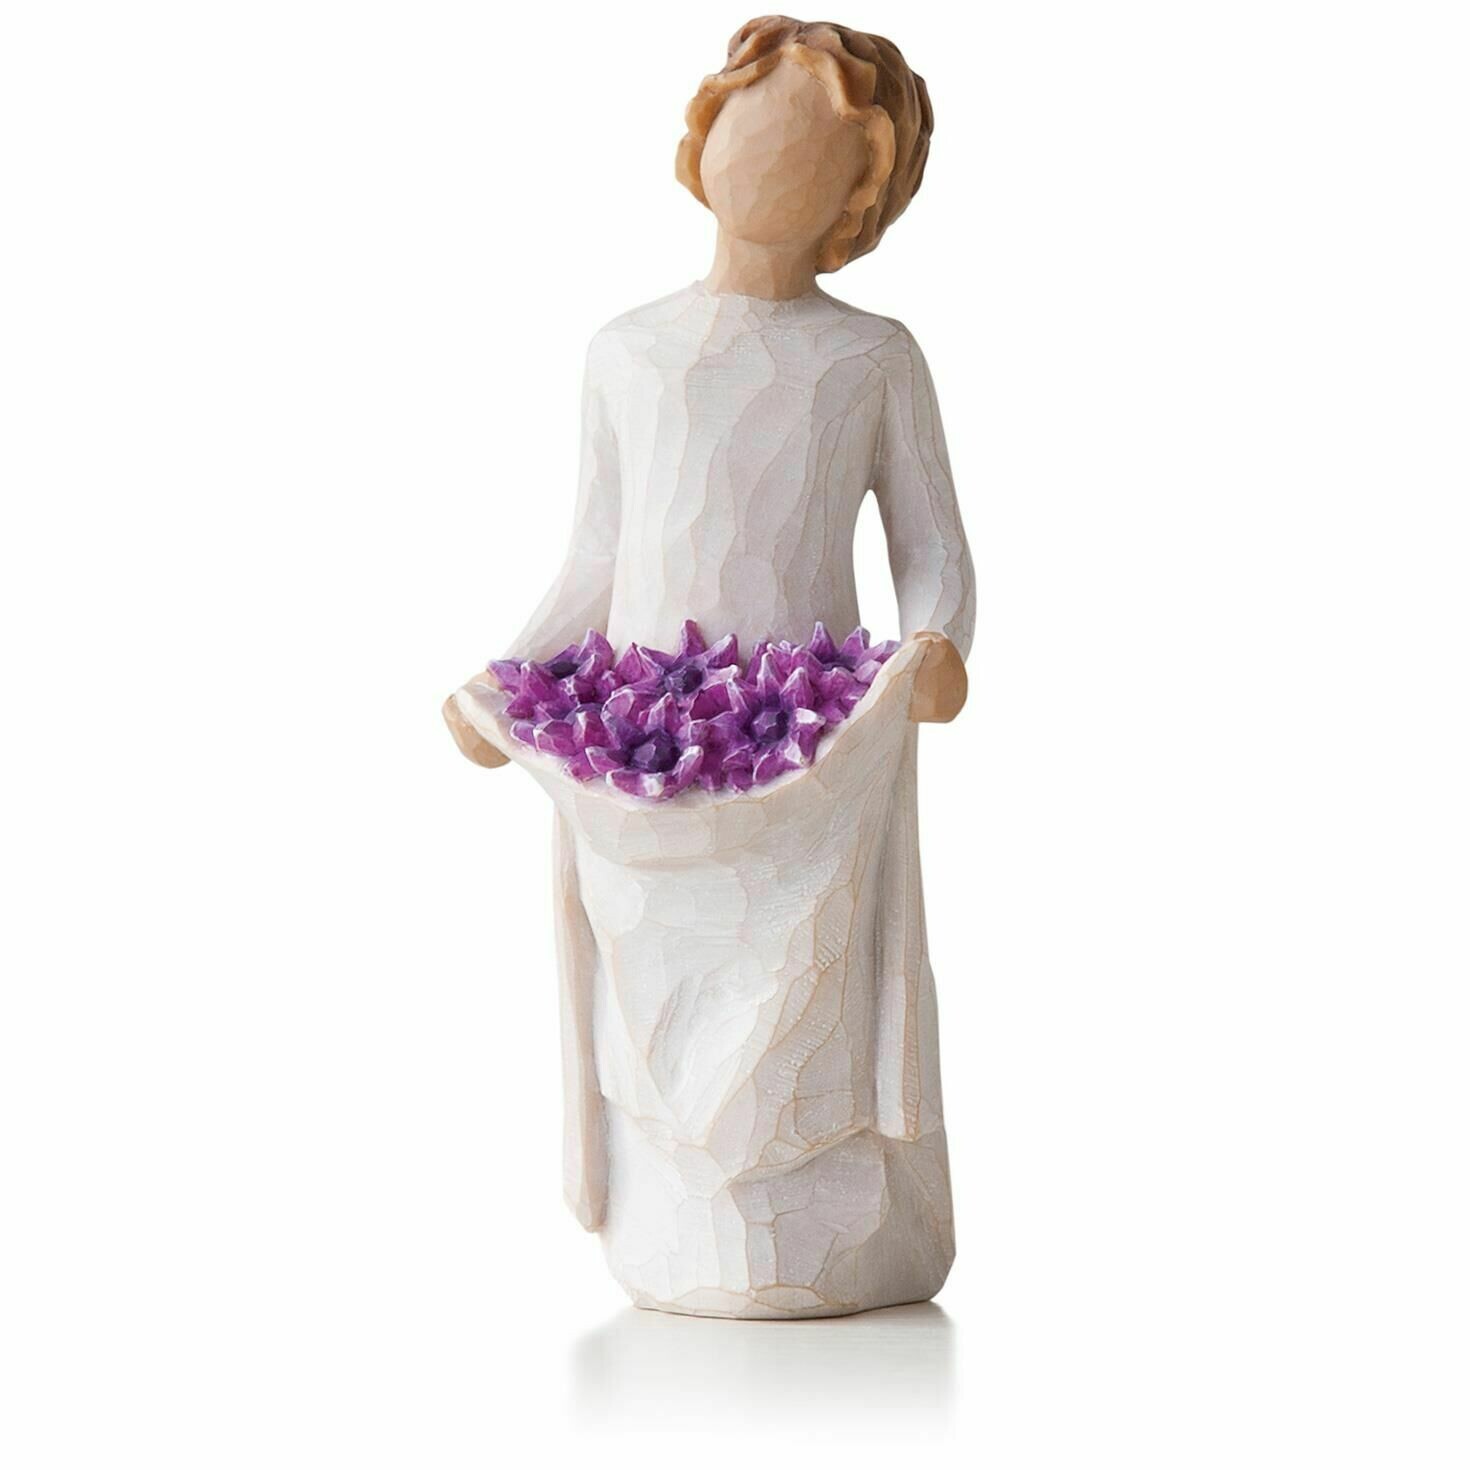 Willow Tree: Simple Joys - Girl Holding Purple Flowers in Dress